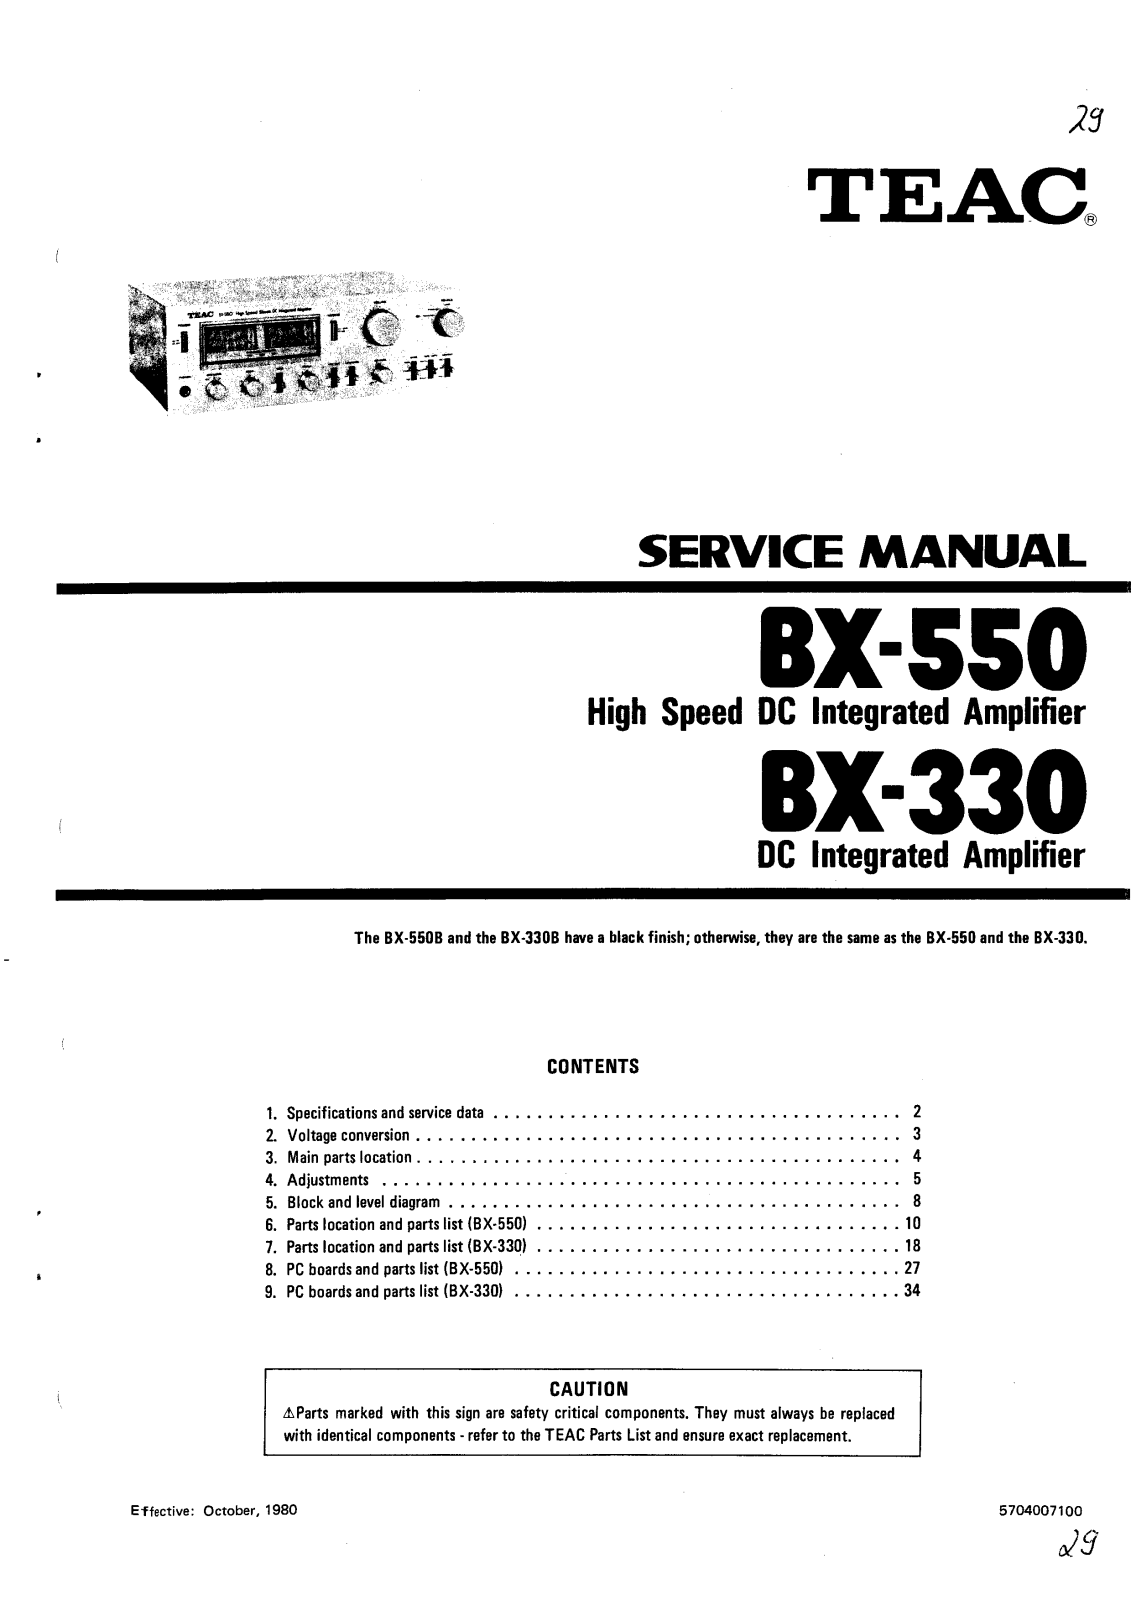 TEAC BX-330, BX-550 Service manual